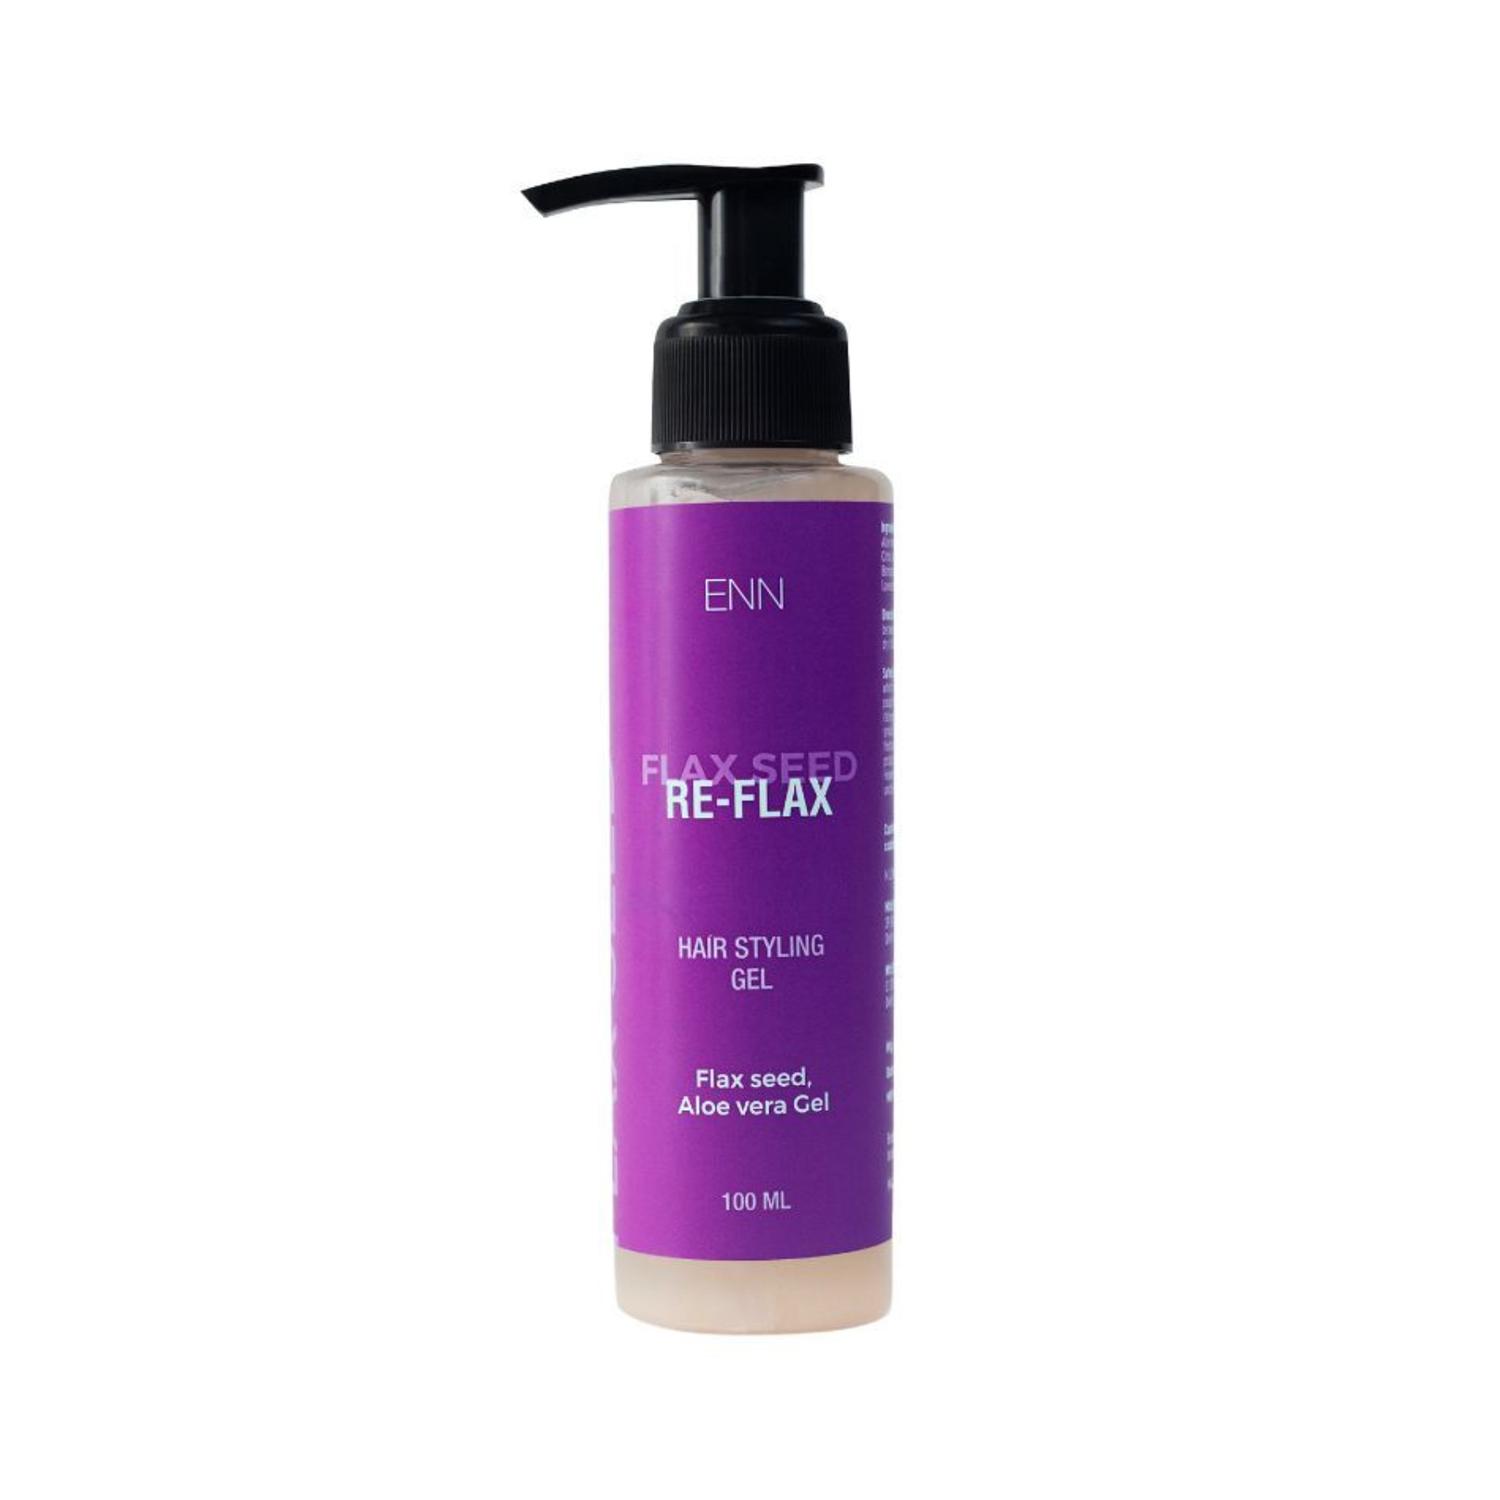 enn reflax flaxseed hair styling gel (100ml)